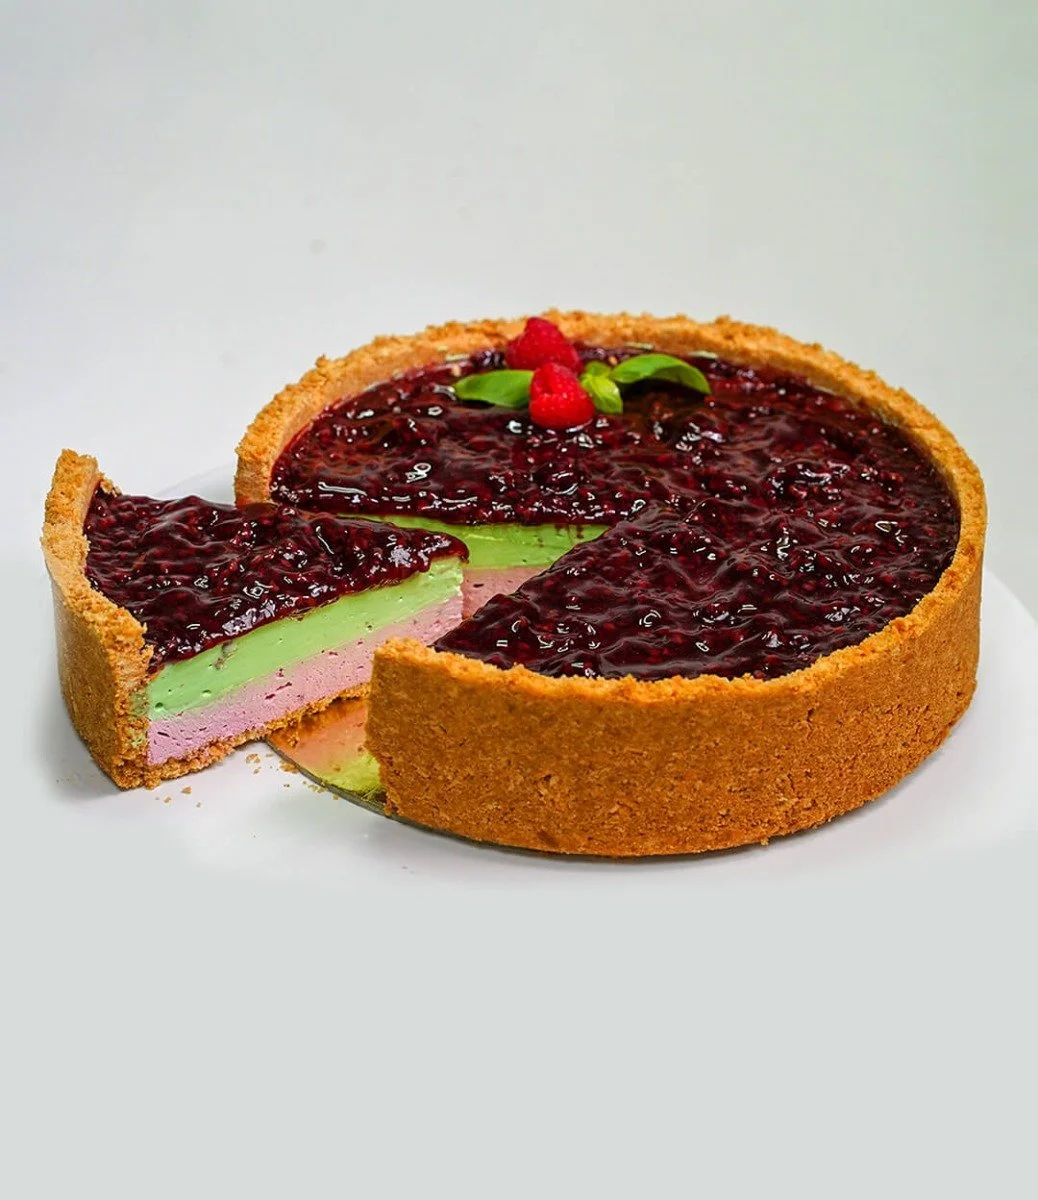 Raspberry Matcha Cheesecake by Bloomsburys